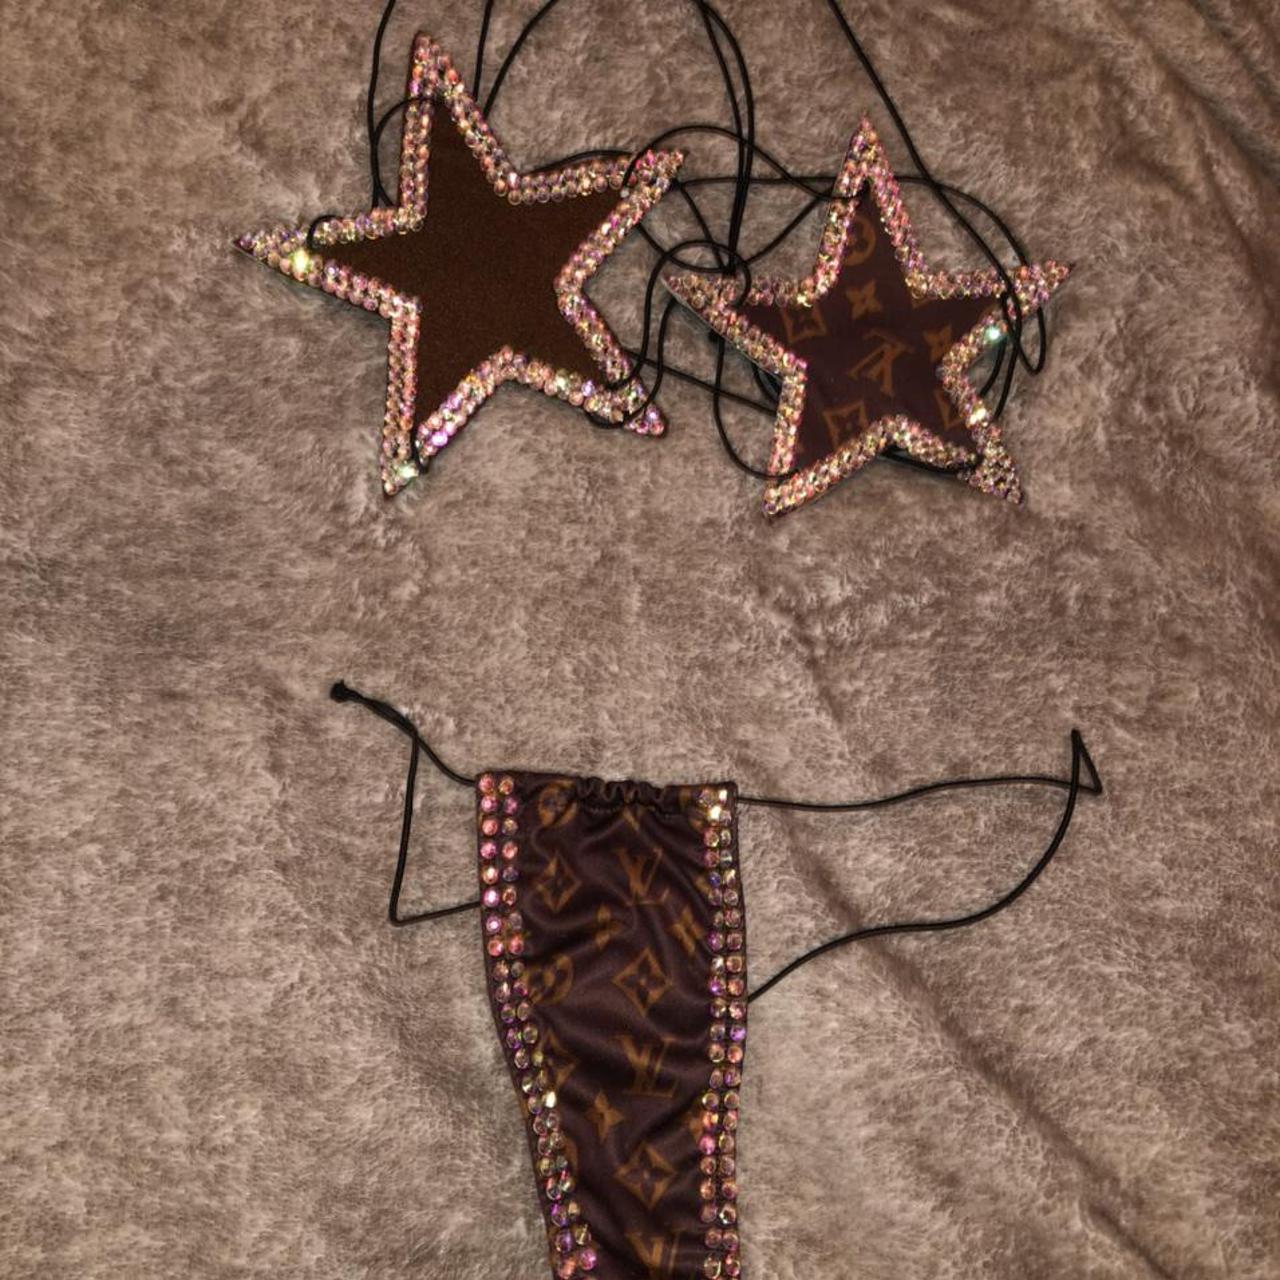 Star micro bikini from lldesign_exotic ( IG), One